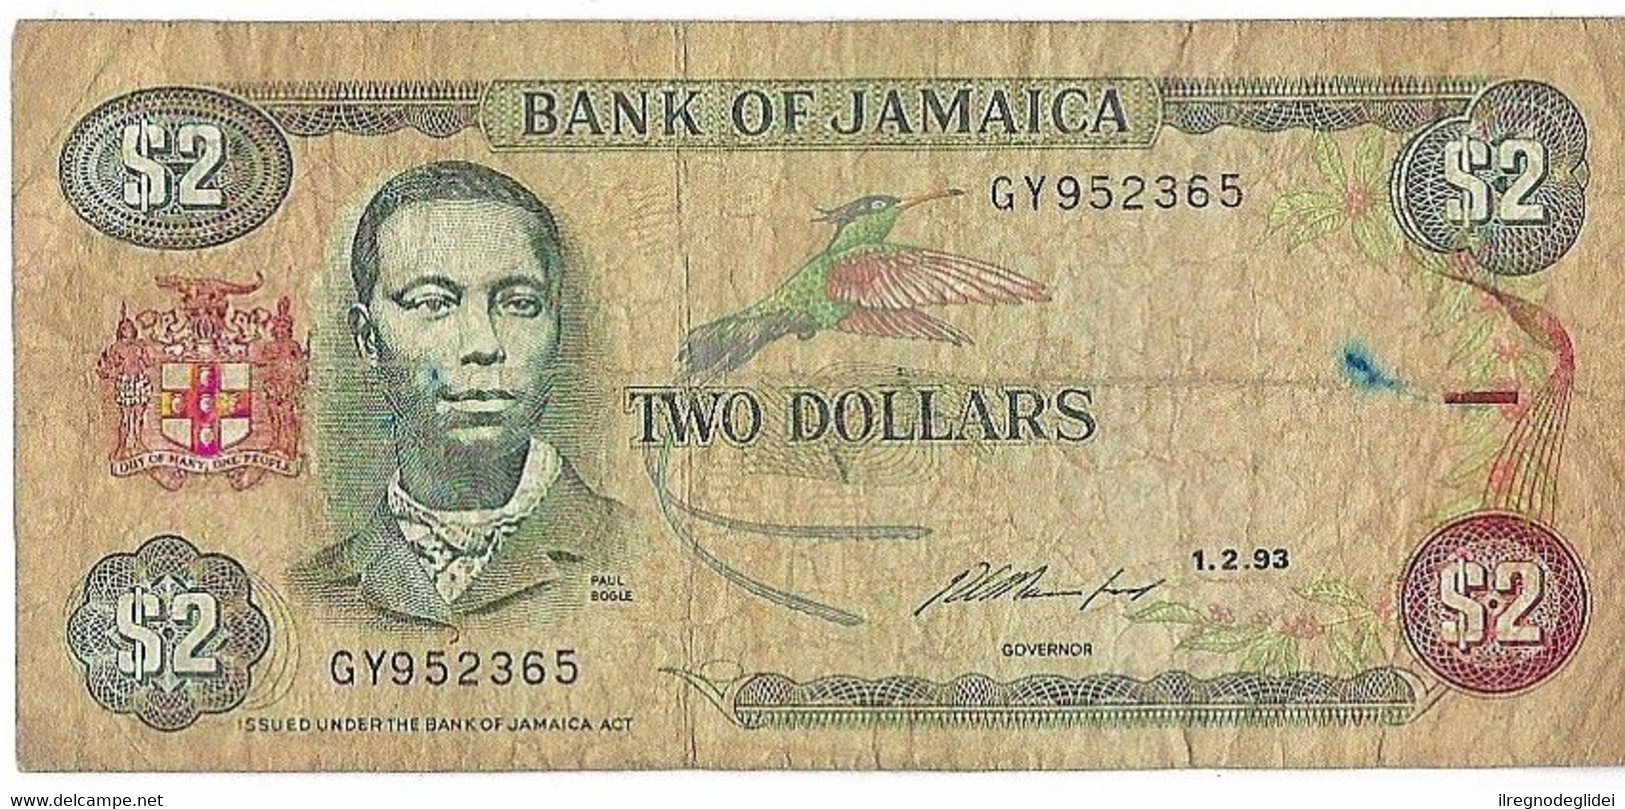 JAMAICA - GIAMAICA  $2 2 DOLLARI - WYSIWYG   - N° SERIALE GY952365 - CARTAMONETA - PAPER MONEY - Jamaique